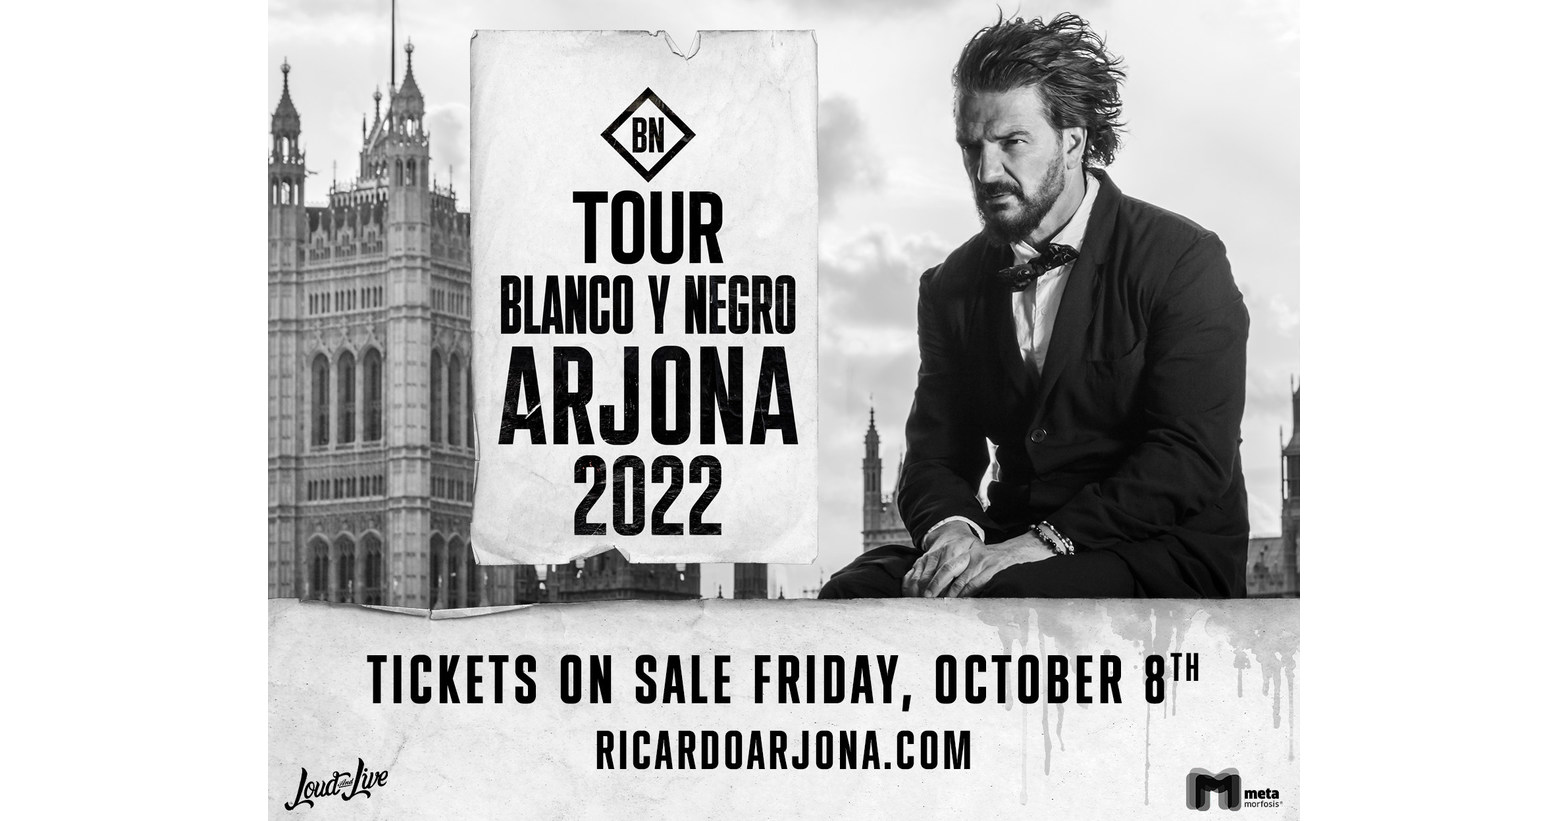 Ricardo Arjona Tour USA 2022 "Blanco y Negro" (Black and White)